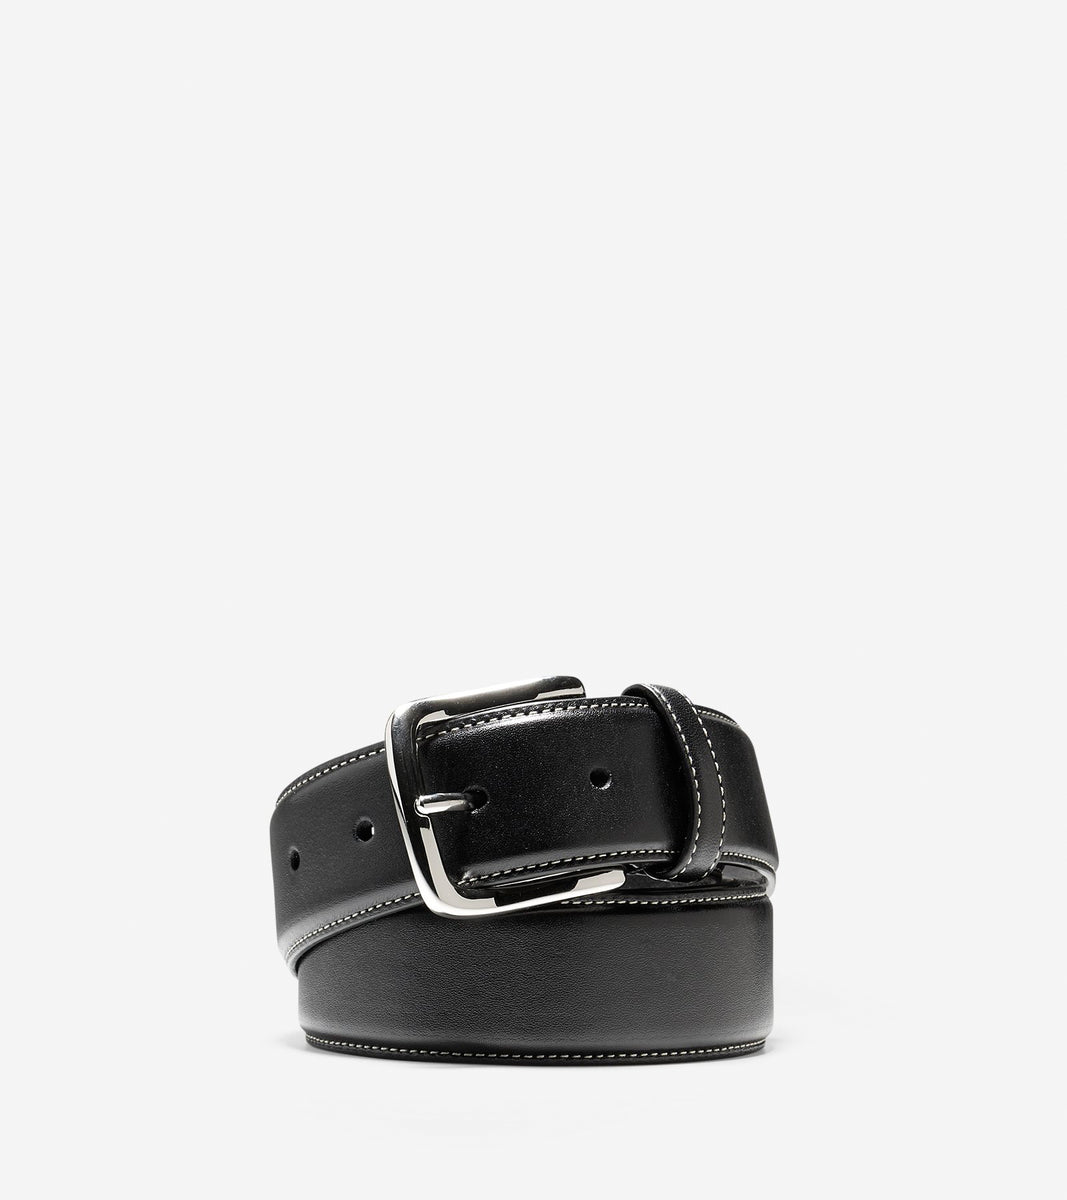 35mm Leather Belt